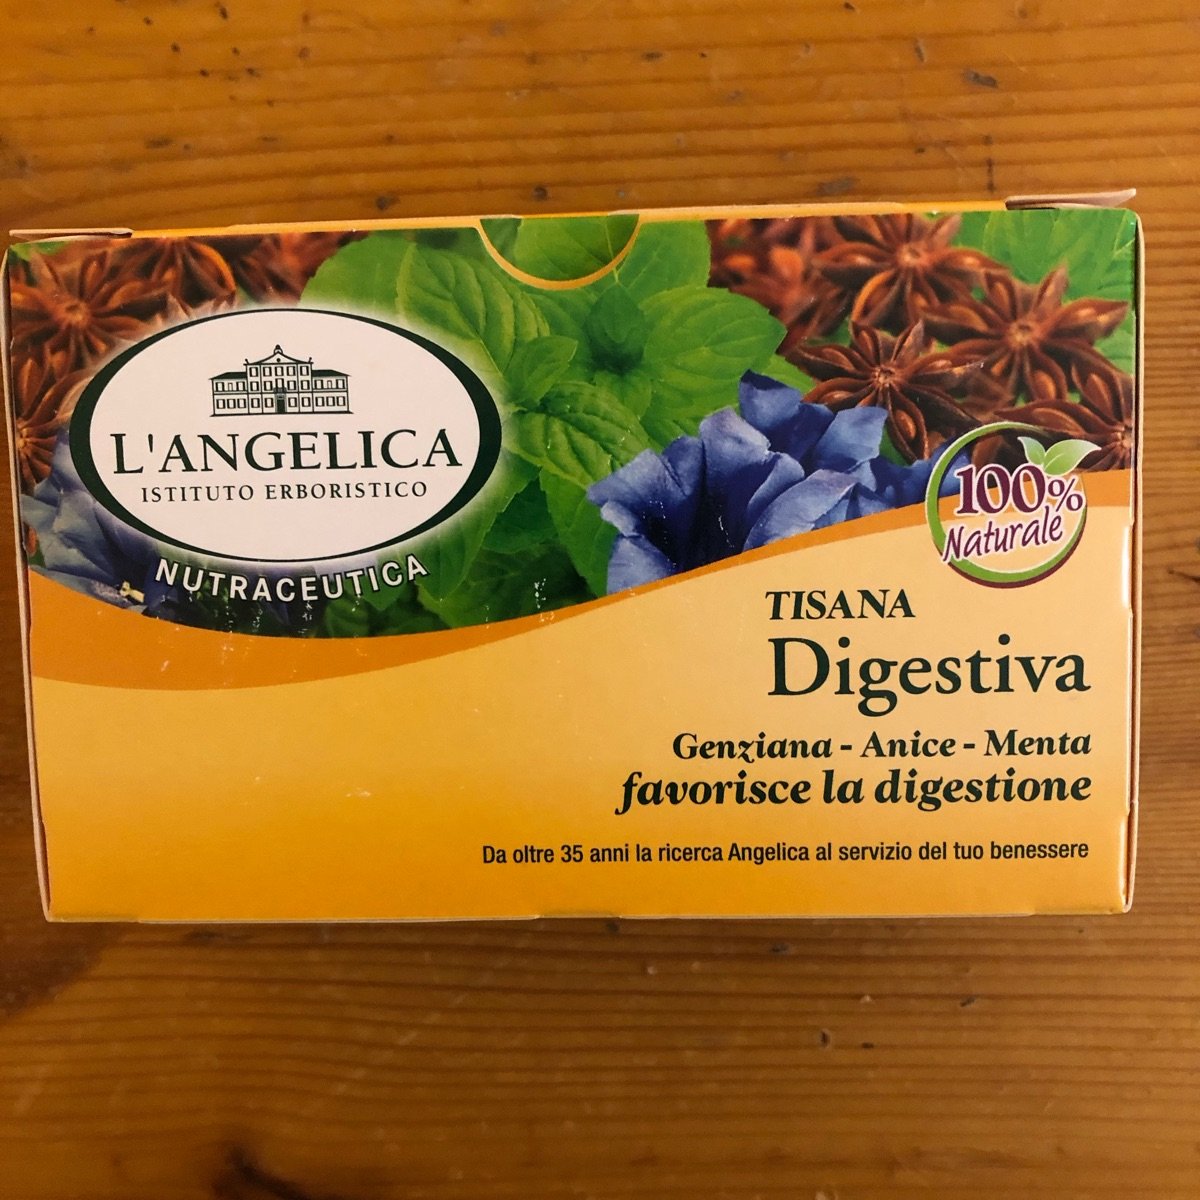 L'angelica Tisana digestiva Reviews